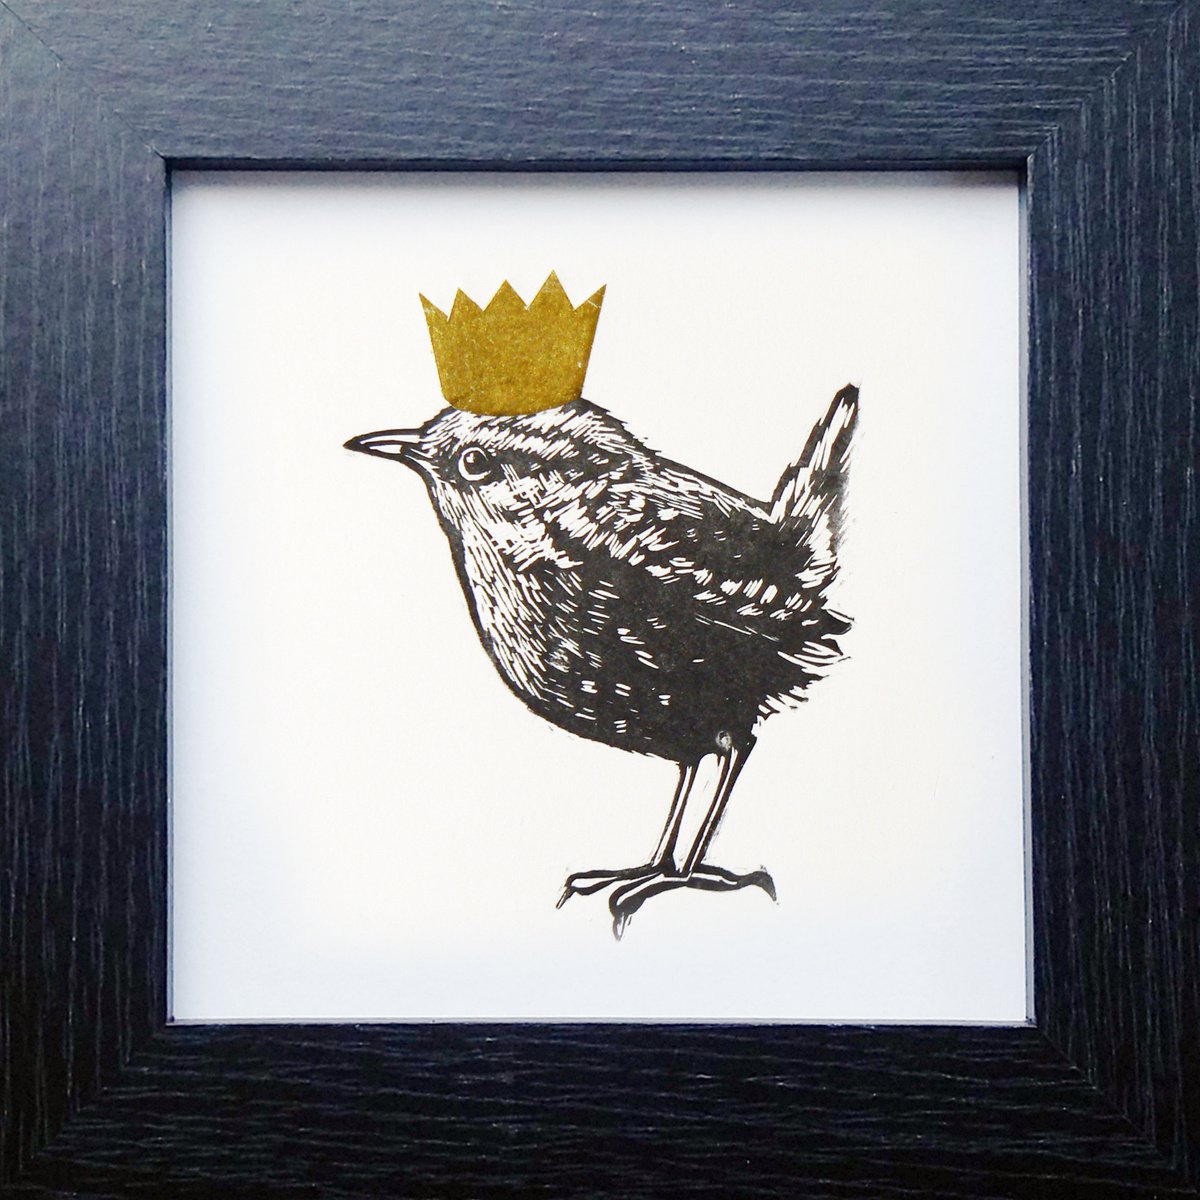 King wren by Carolynne Coulson